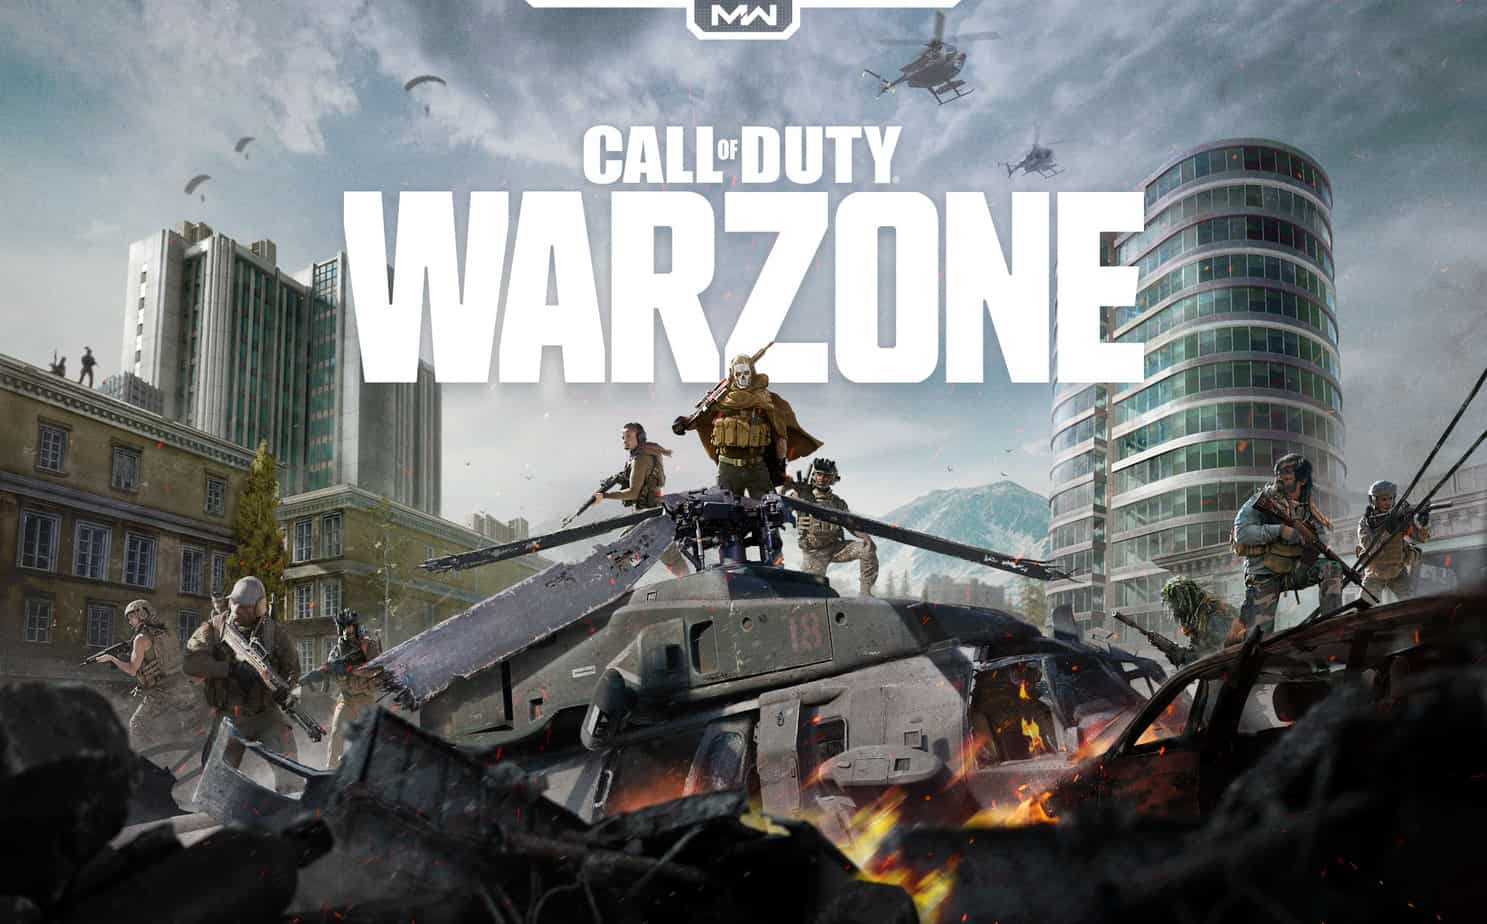 COD Warzone cover art